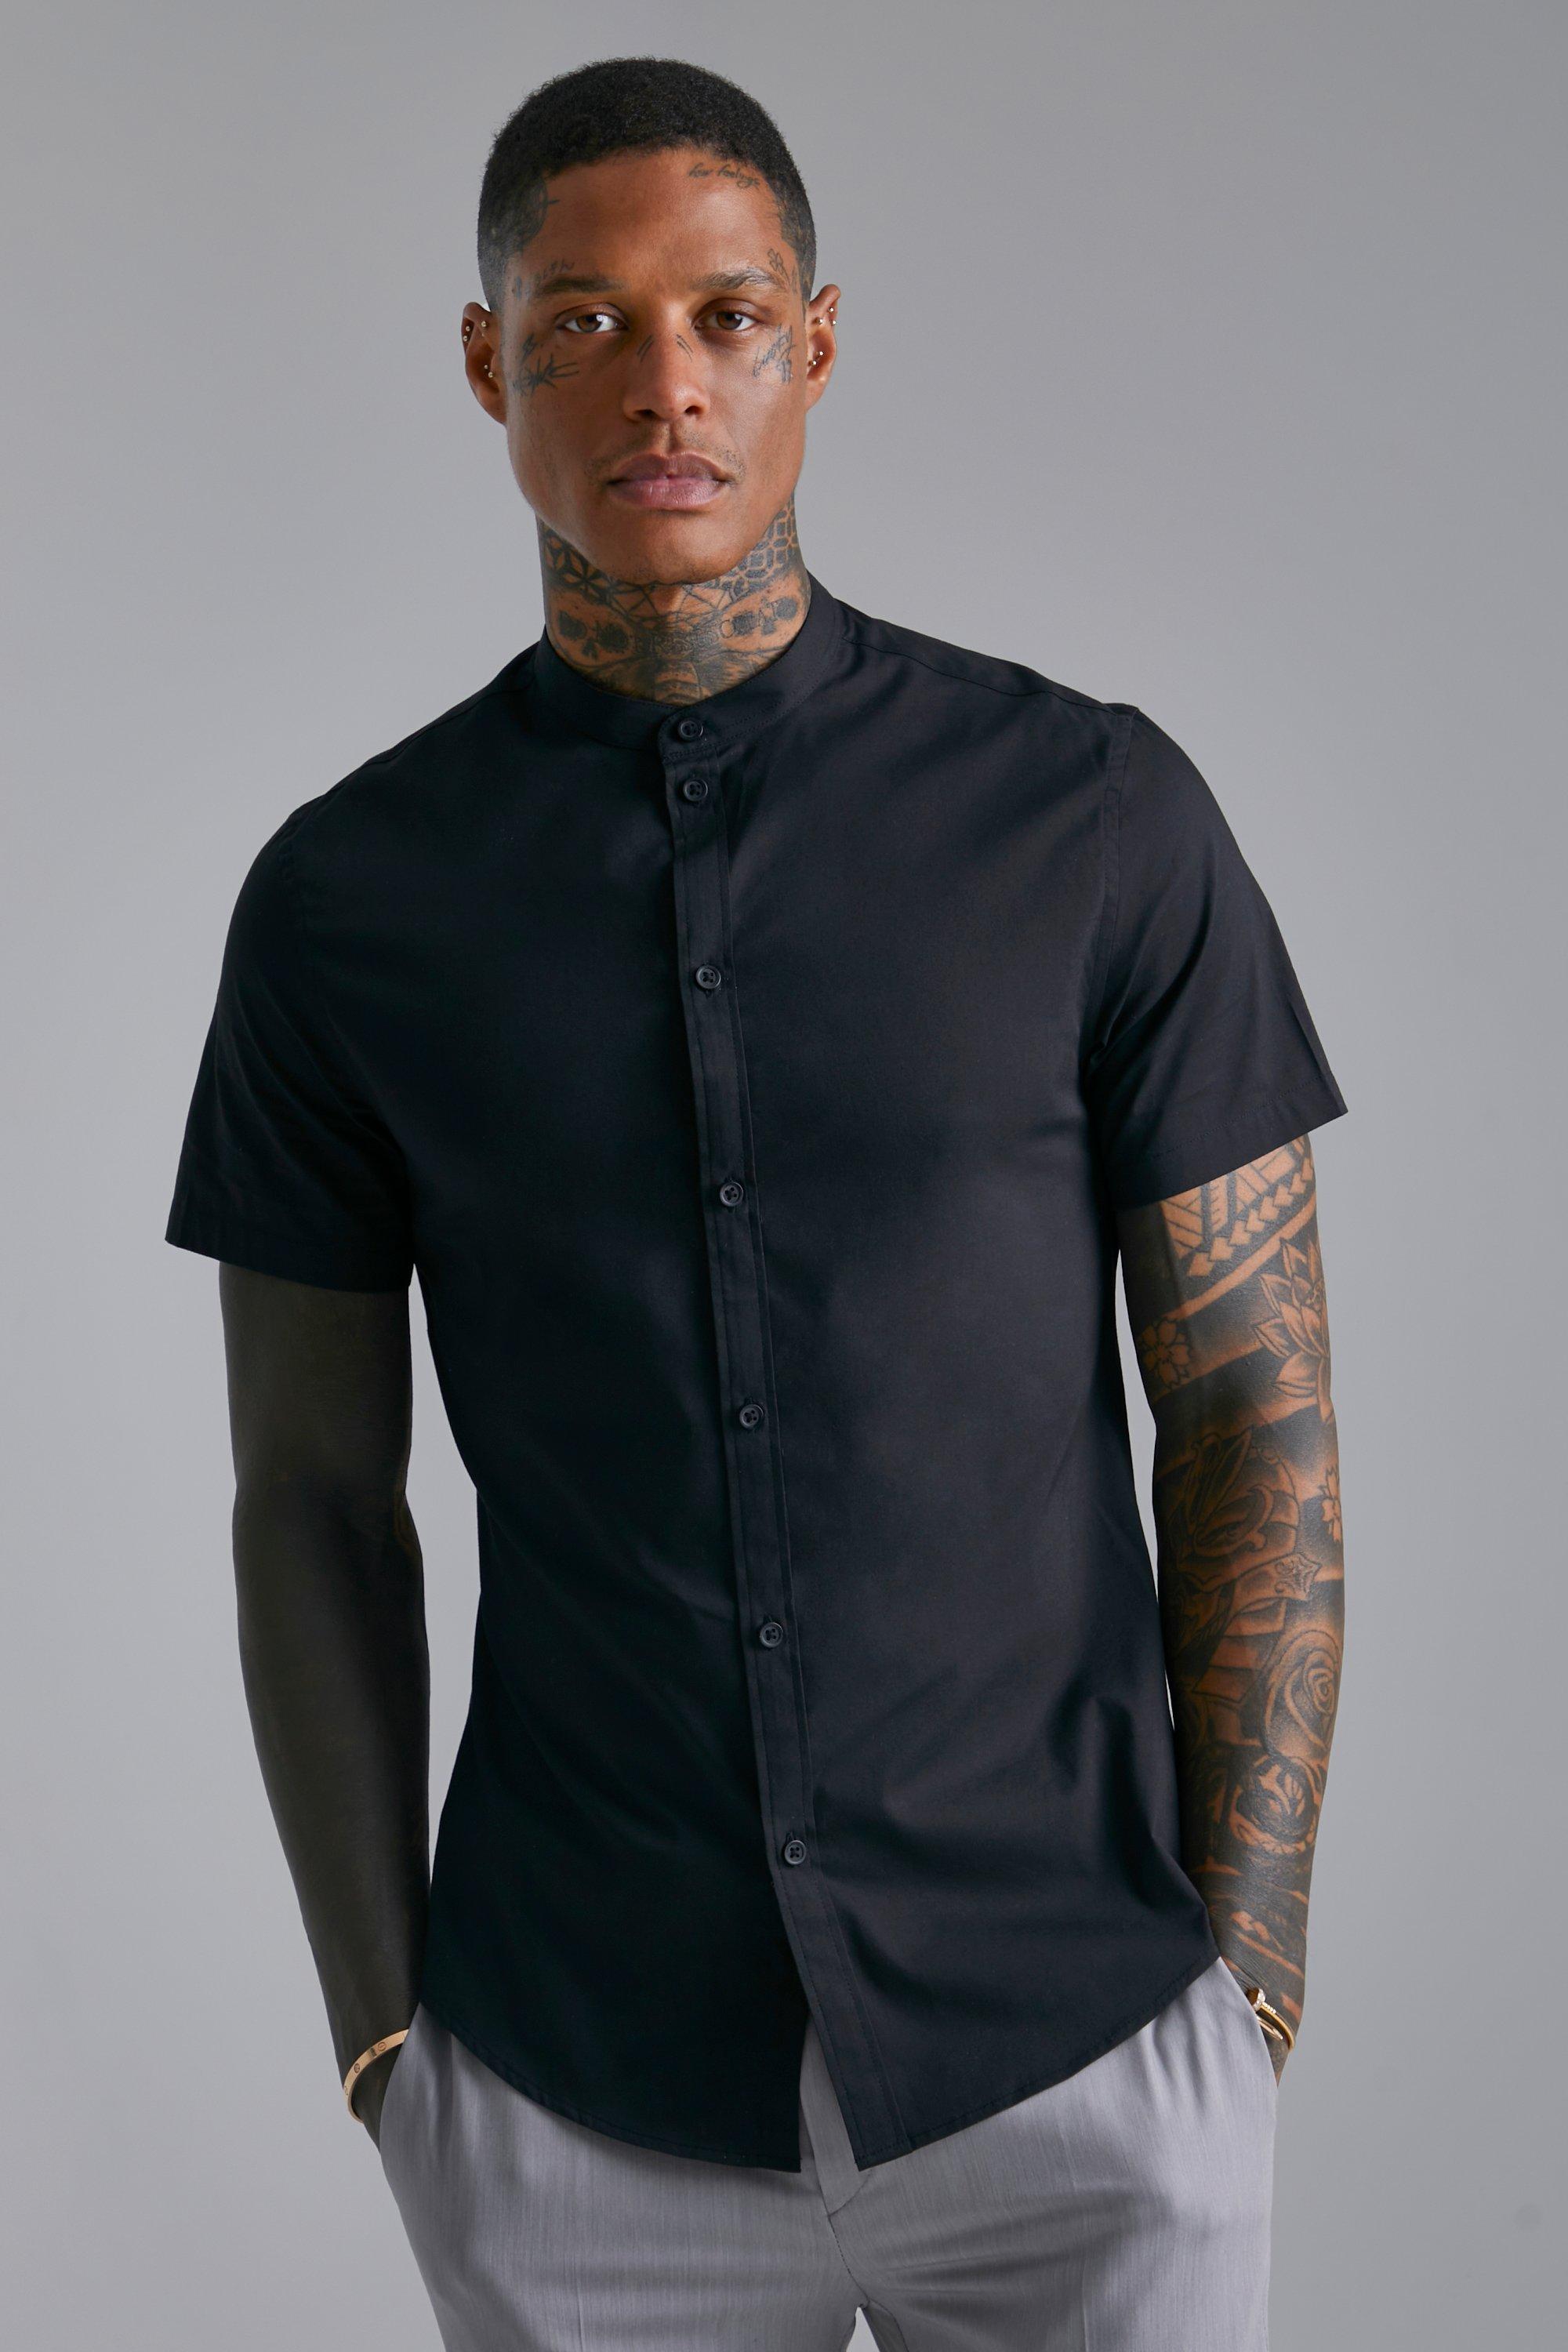 Black Shirts For Men, Black Dress & Casual Shirts